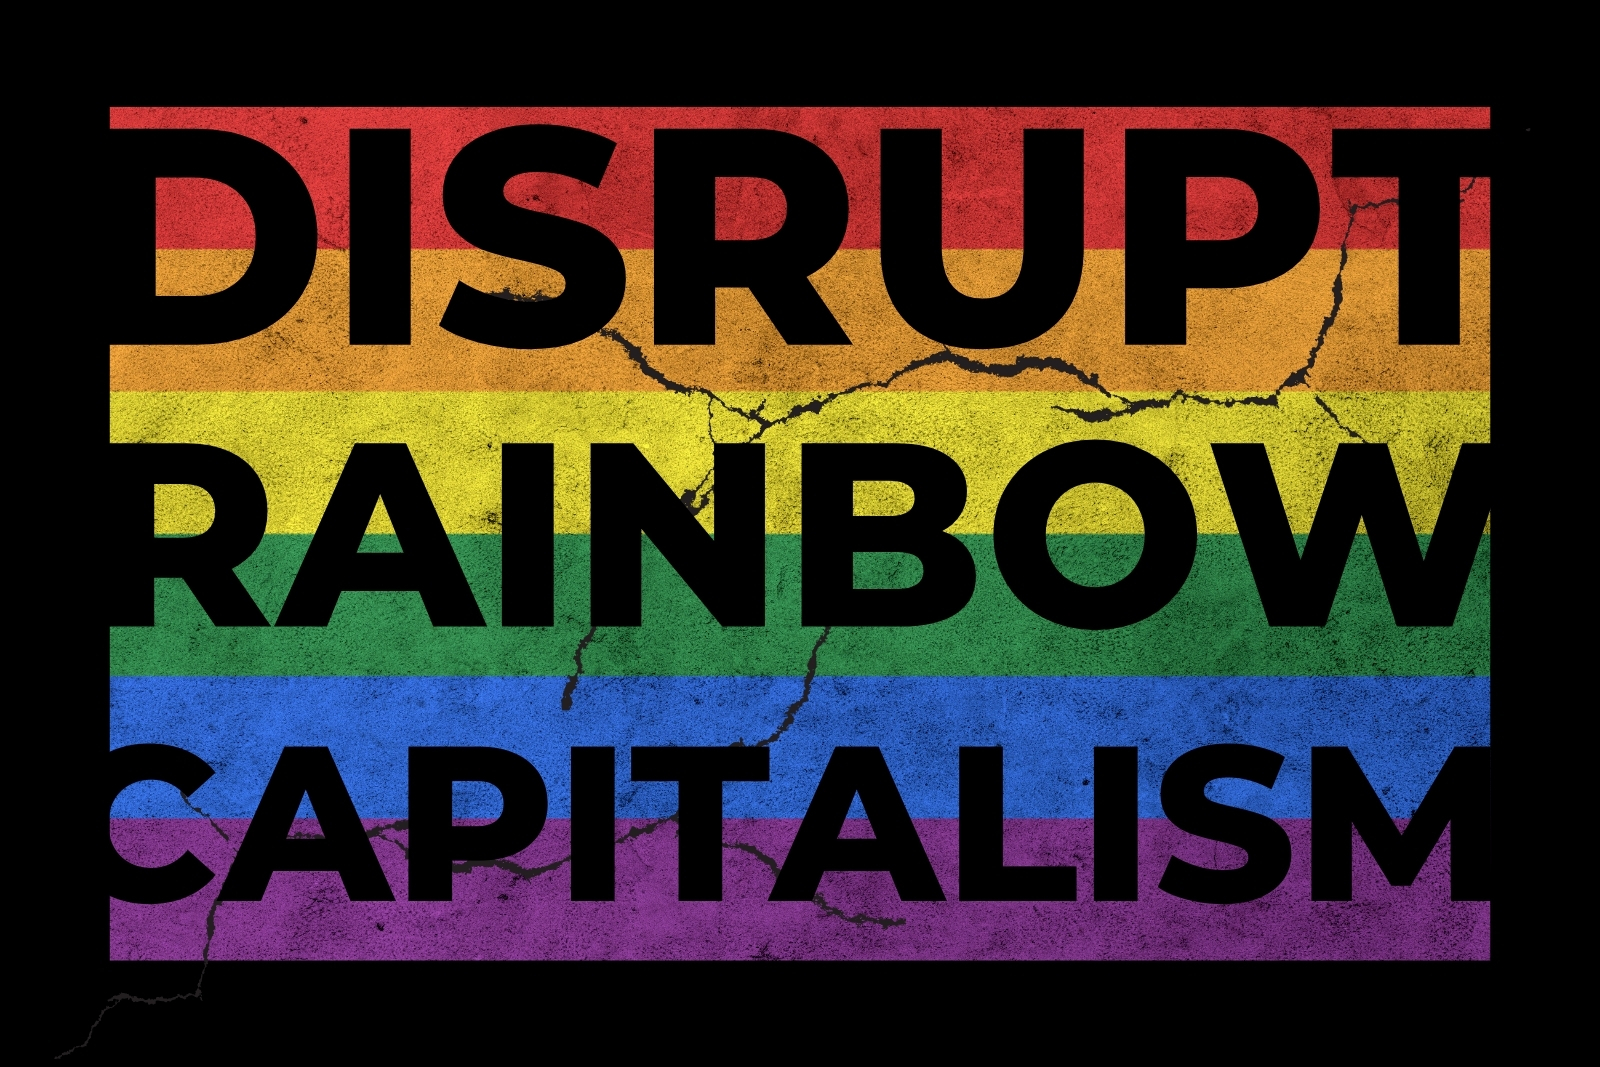 Rainbow Capitalism